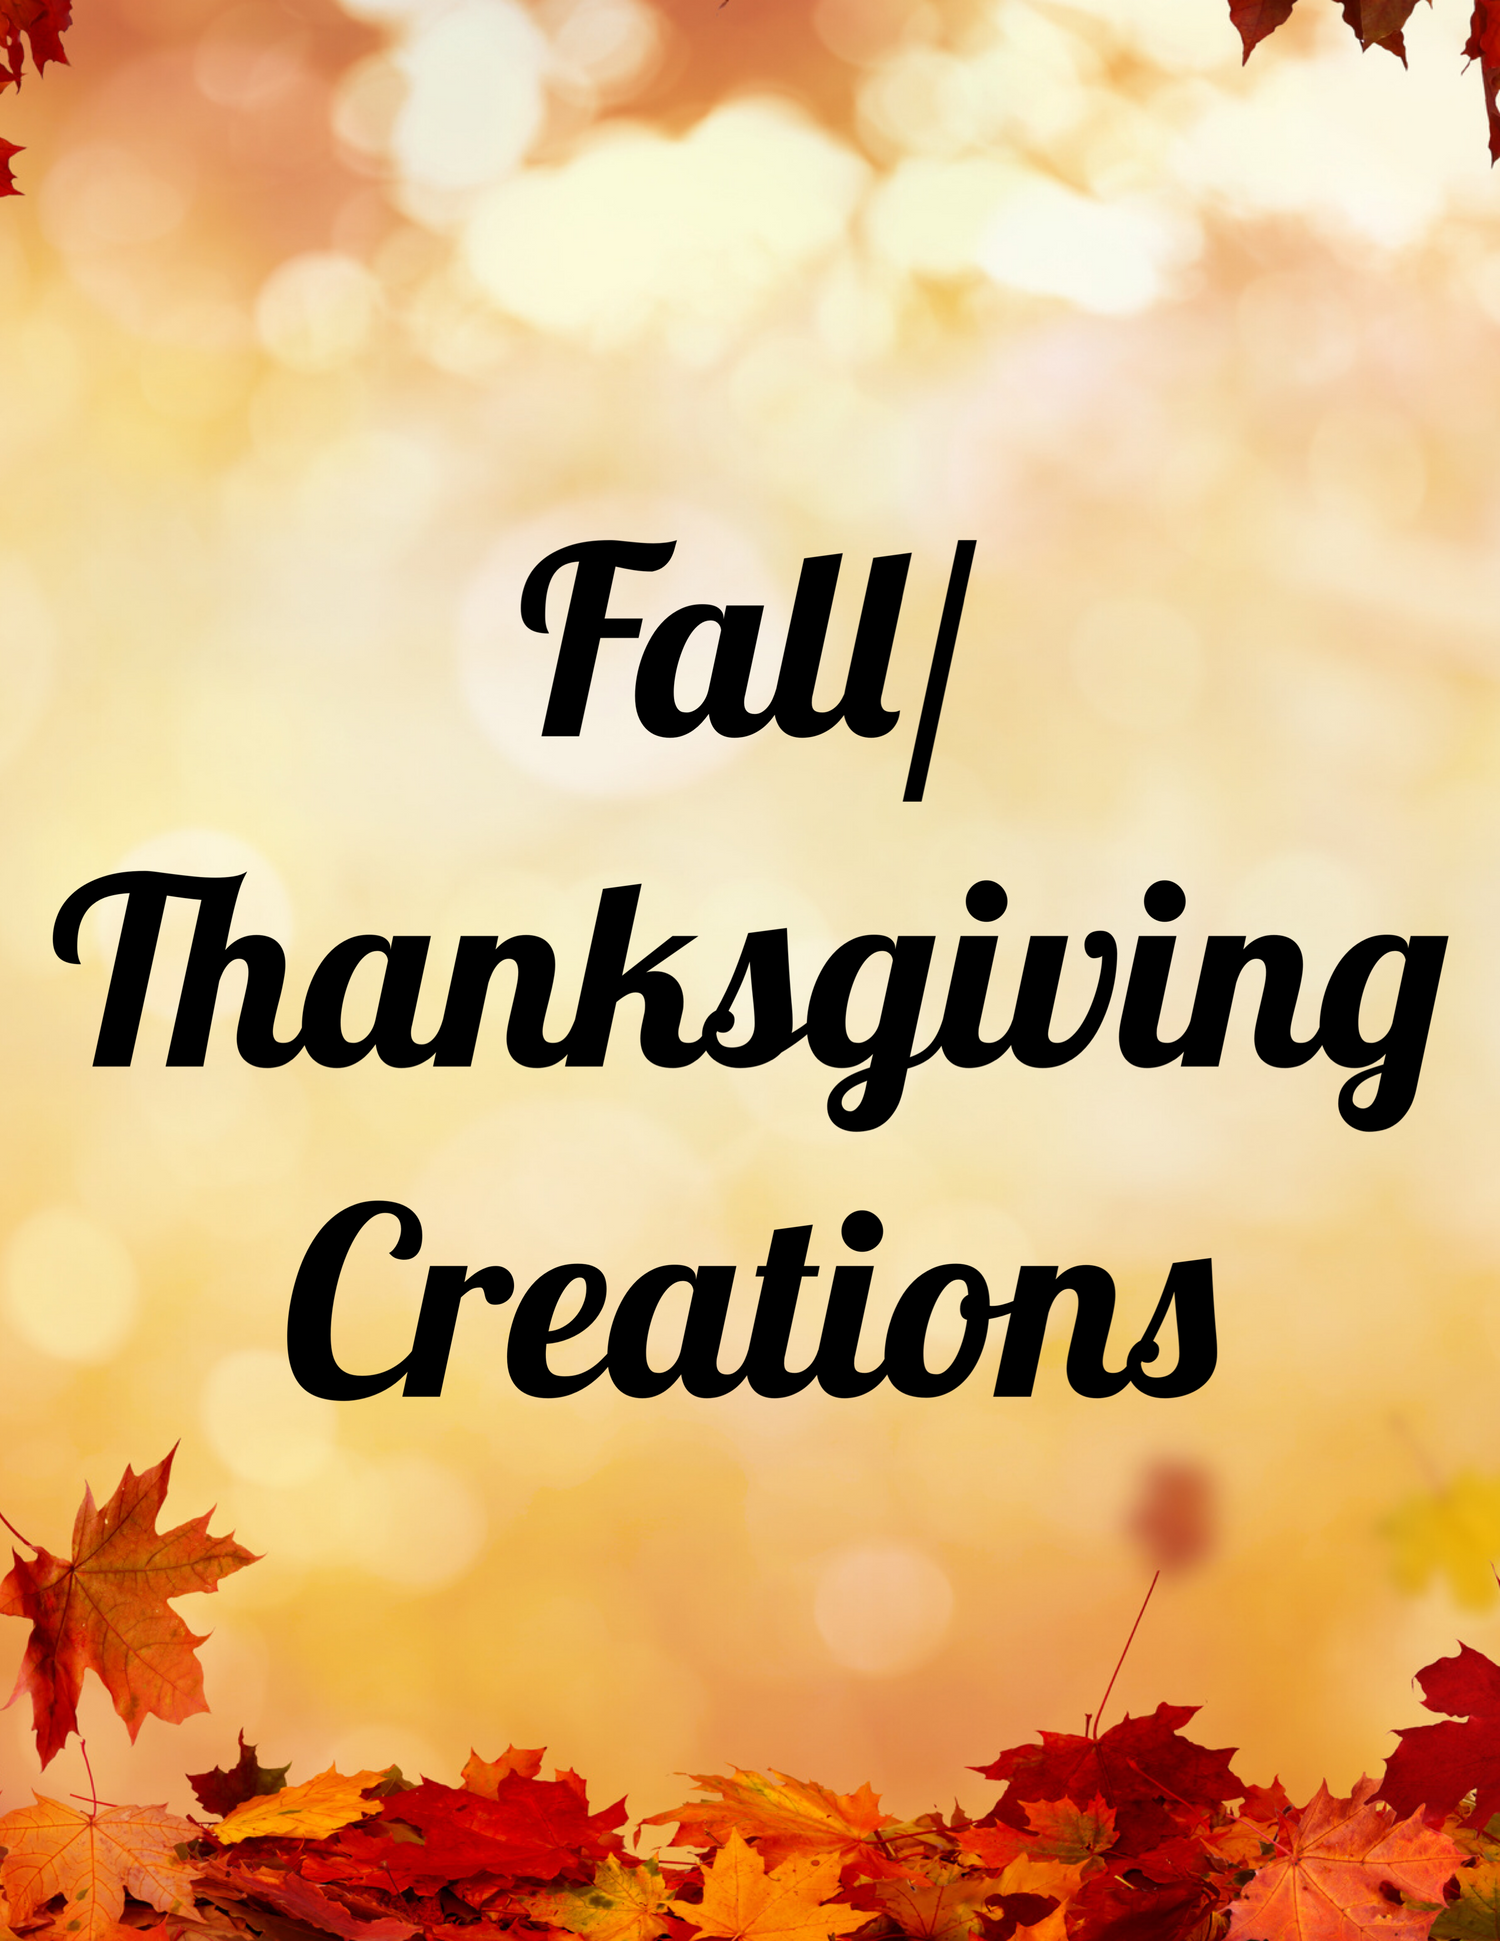 Fall/ Thanksgiving